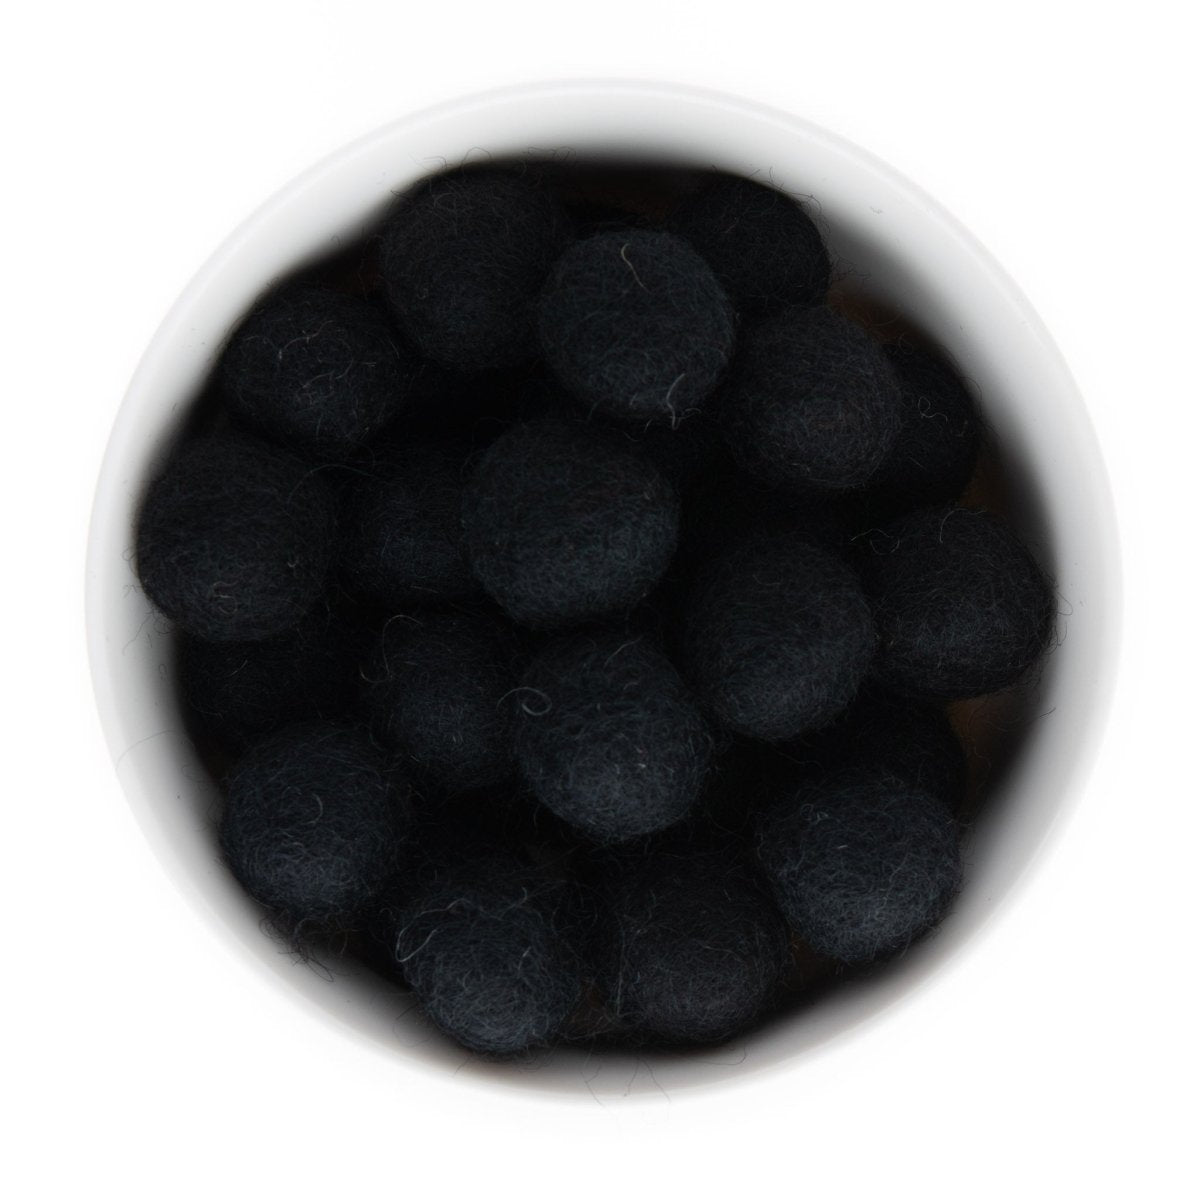 Felt & Crochet Beads Felt Balls 22mm Black from Cara & Co Craft Supply